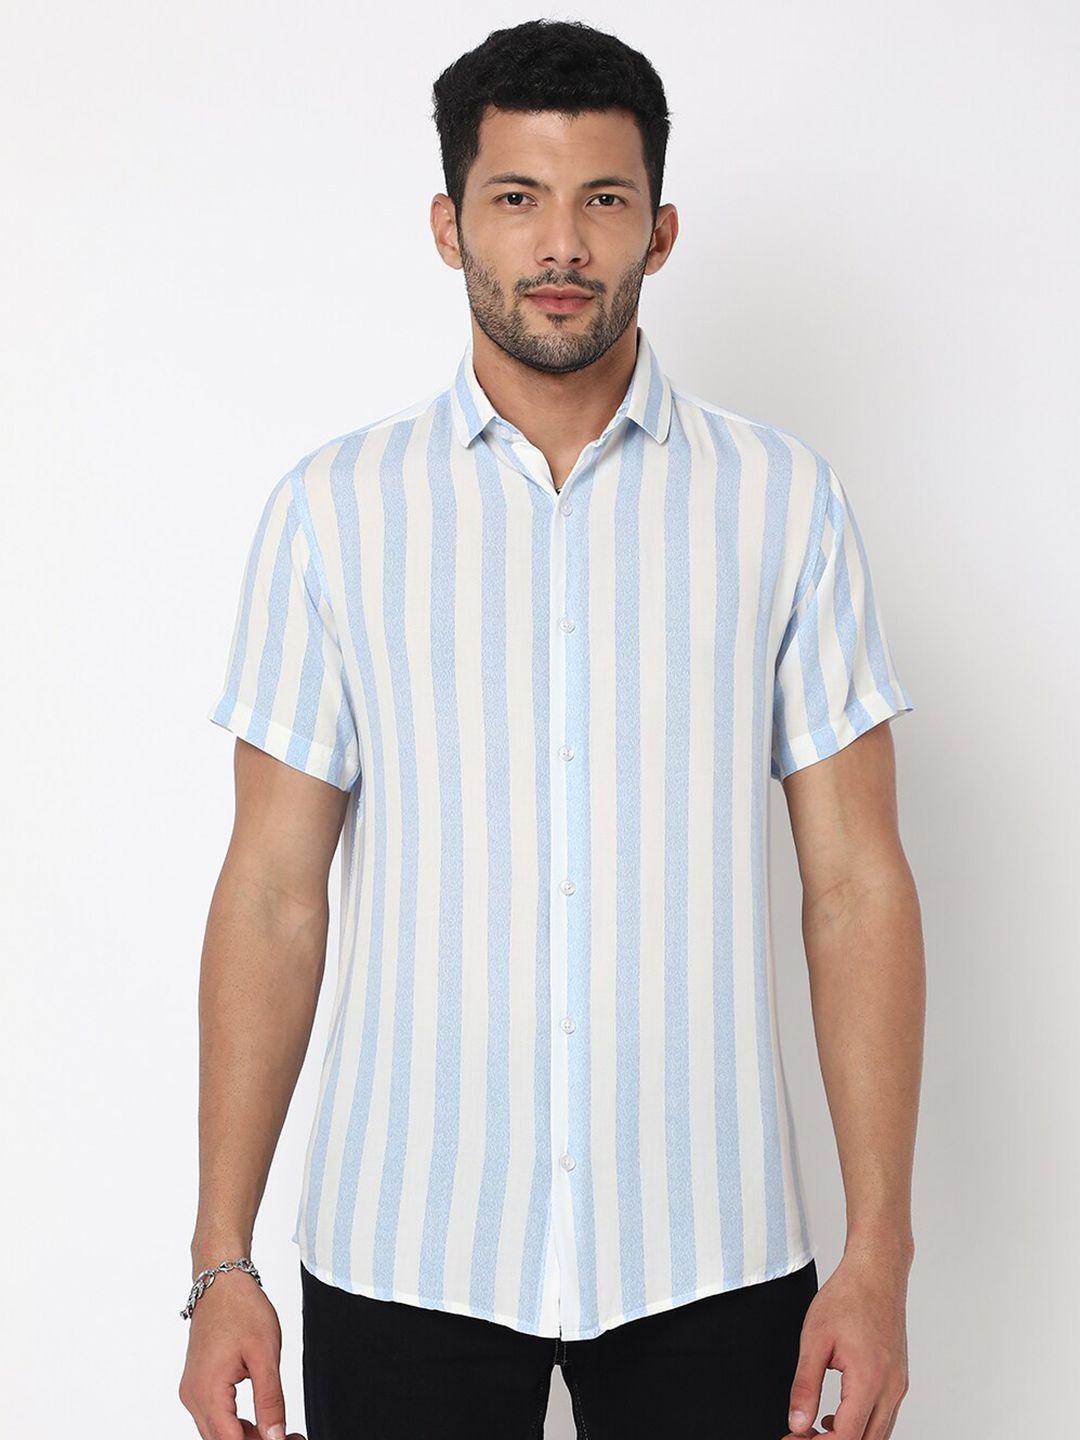 7shores-classic-striped-casual-shirt